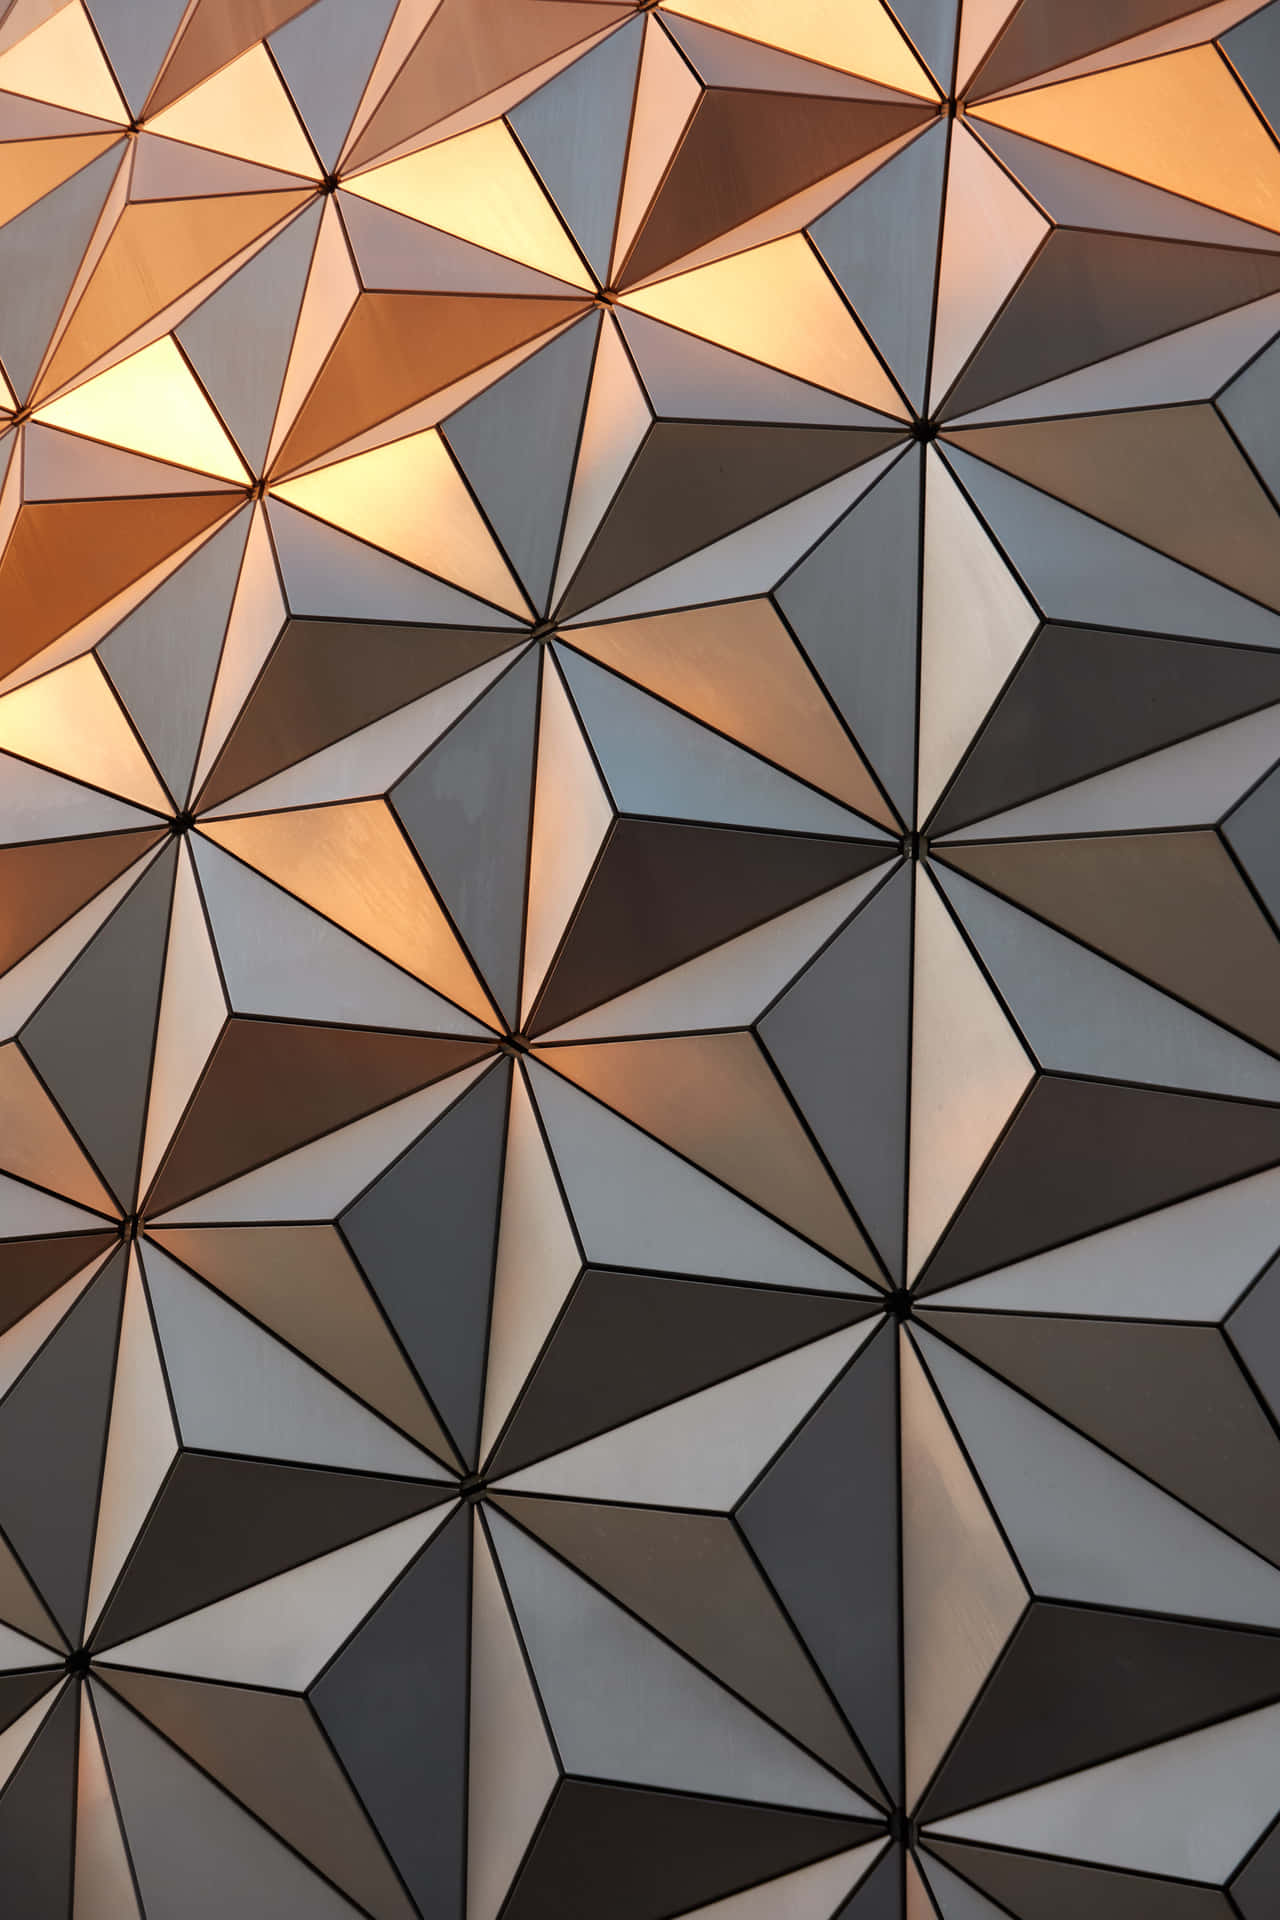 Exceptional Triangular Geometric Design Wallpaper